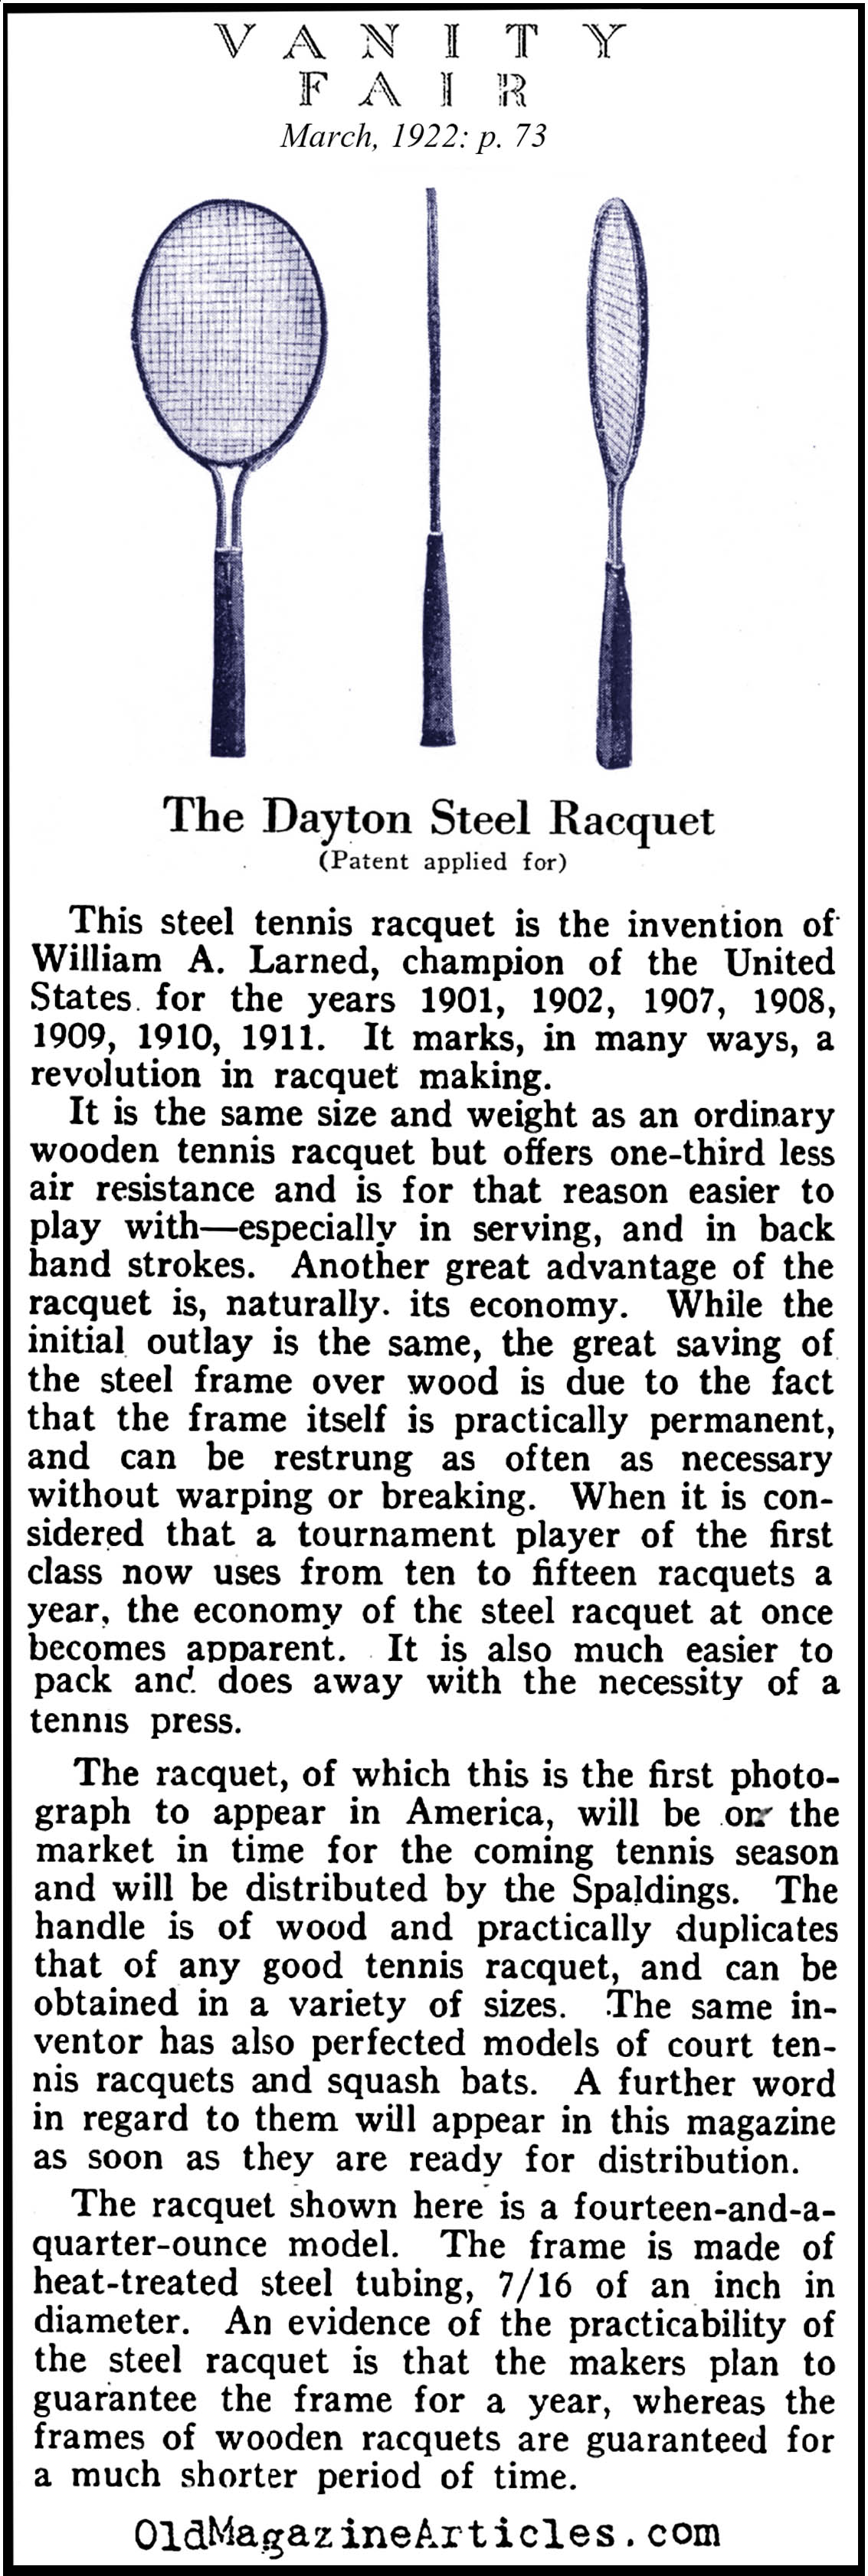 The Steel Tennis Racket Makes It's Appearance (Vanity Fair Magazine, 1922)